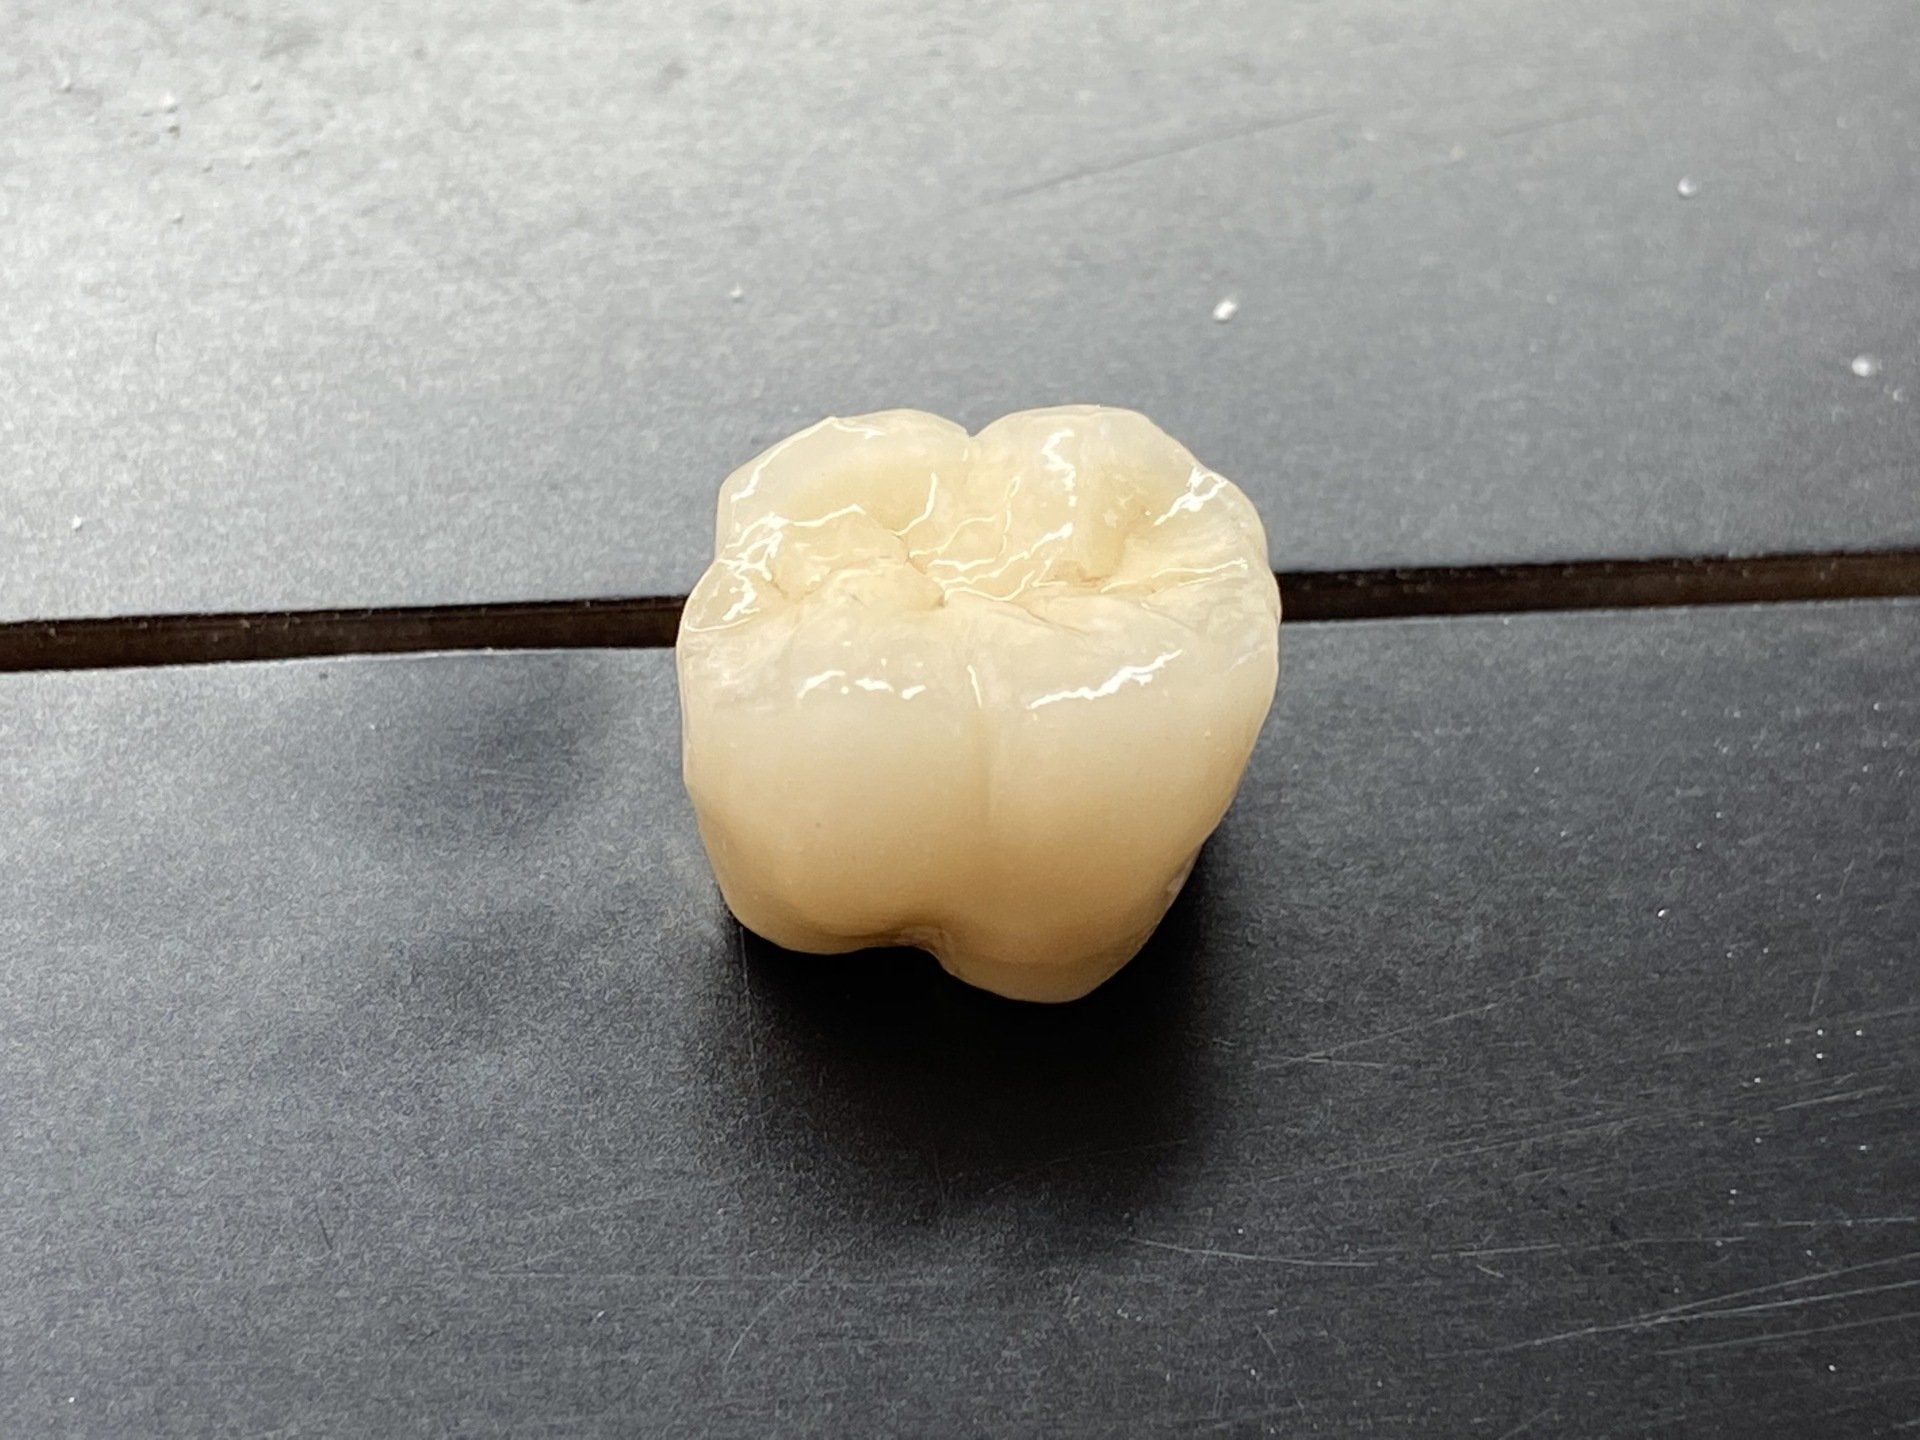 The porcelain-bonded crown bridge unit is a popular, aesthetic and affordable dental bridge